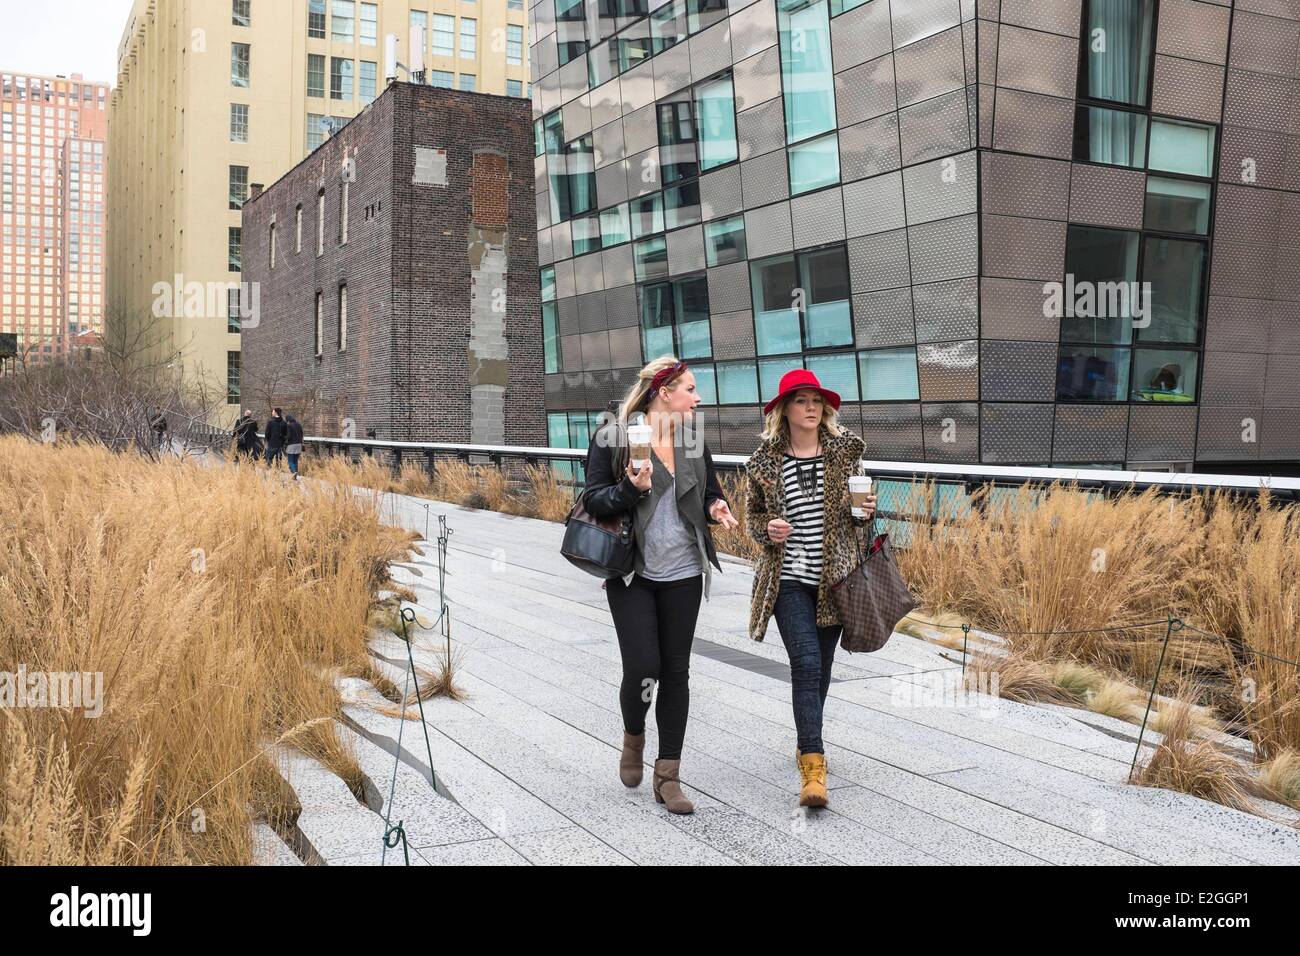 Stati Uniti New York Manhattan Meatpacking District (Gansevoort Mercato) High Line Park è un ex via aria parzialmente ripristinata in sospeso un parco urbano Foto Stock